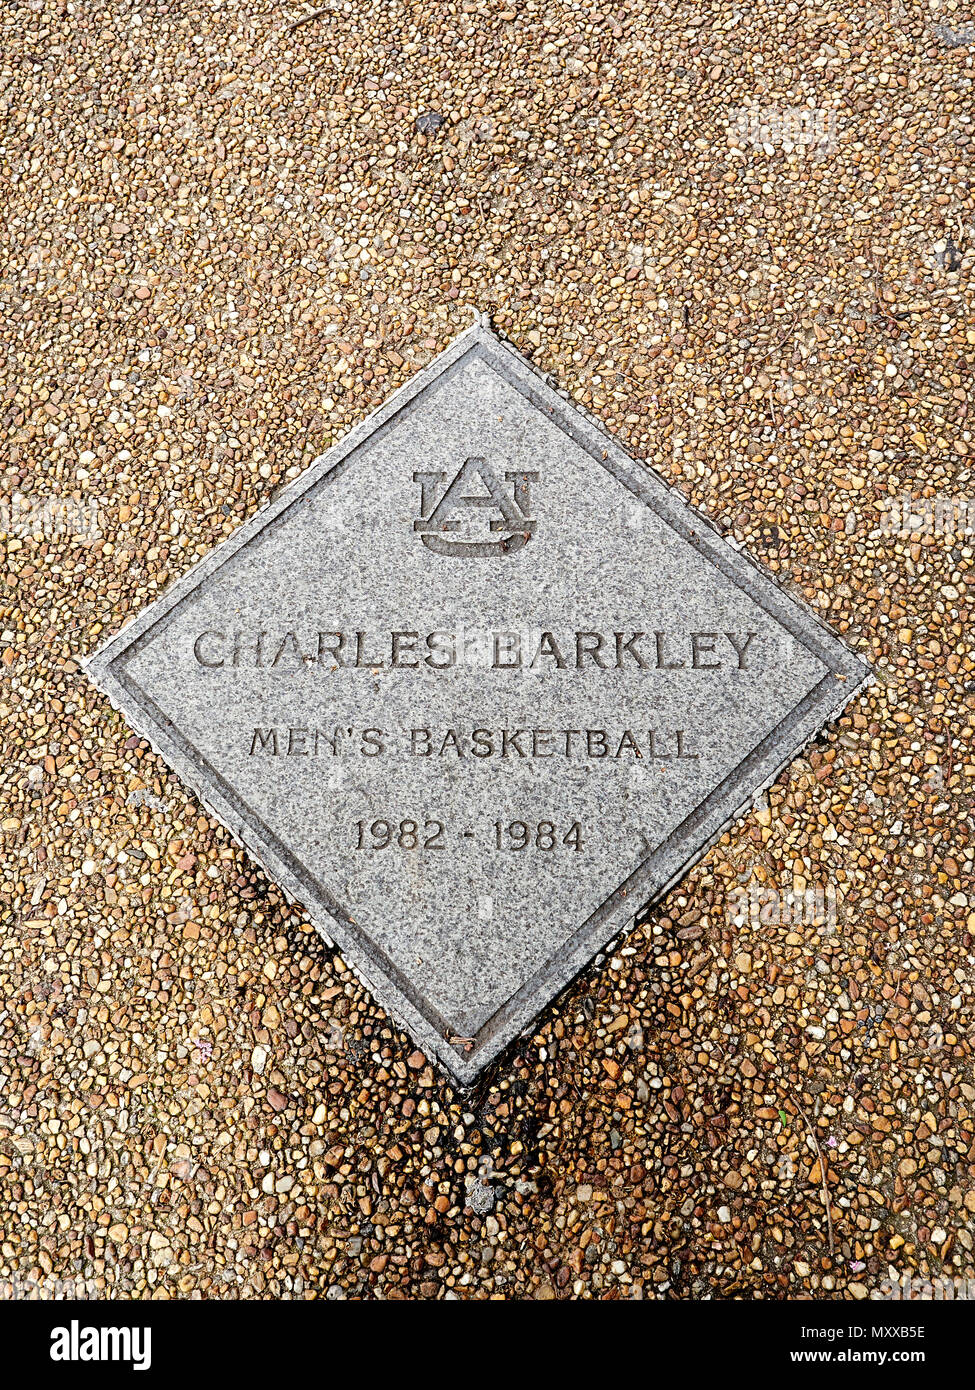 Charles Barkley public monument or commemorative plaque along the sidewalk of fame for outstanding Auburn University athletes in Auburn Alabama, USA. Stock Photo